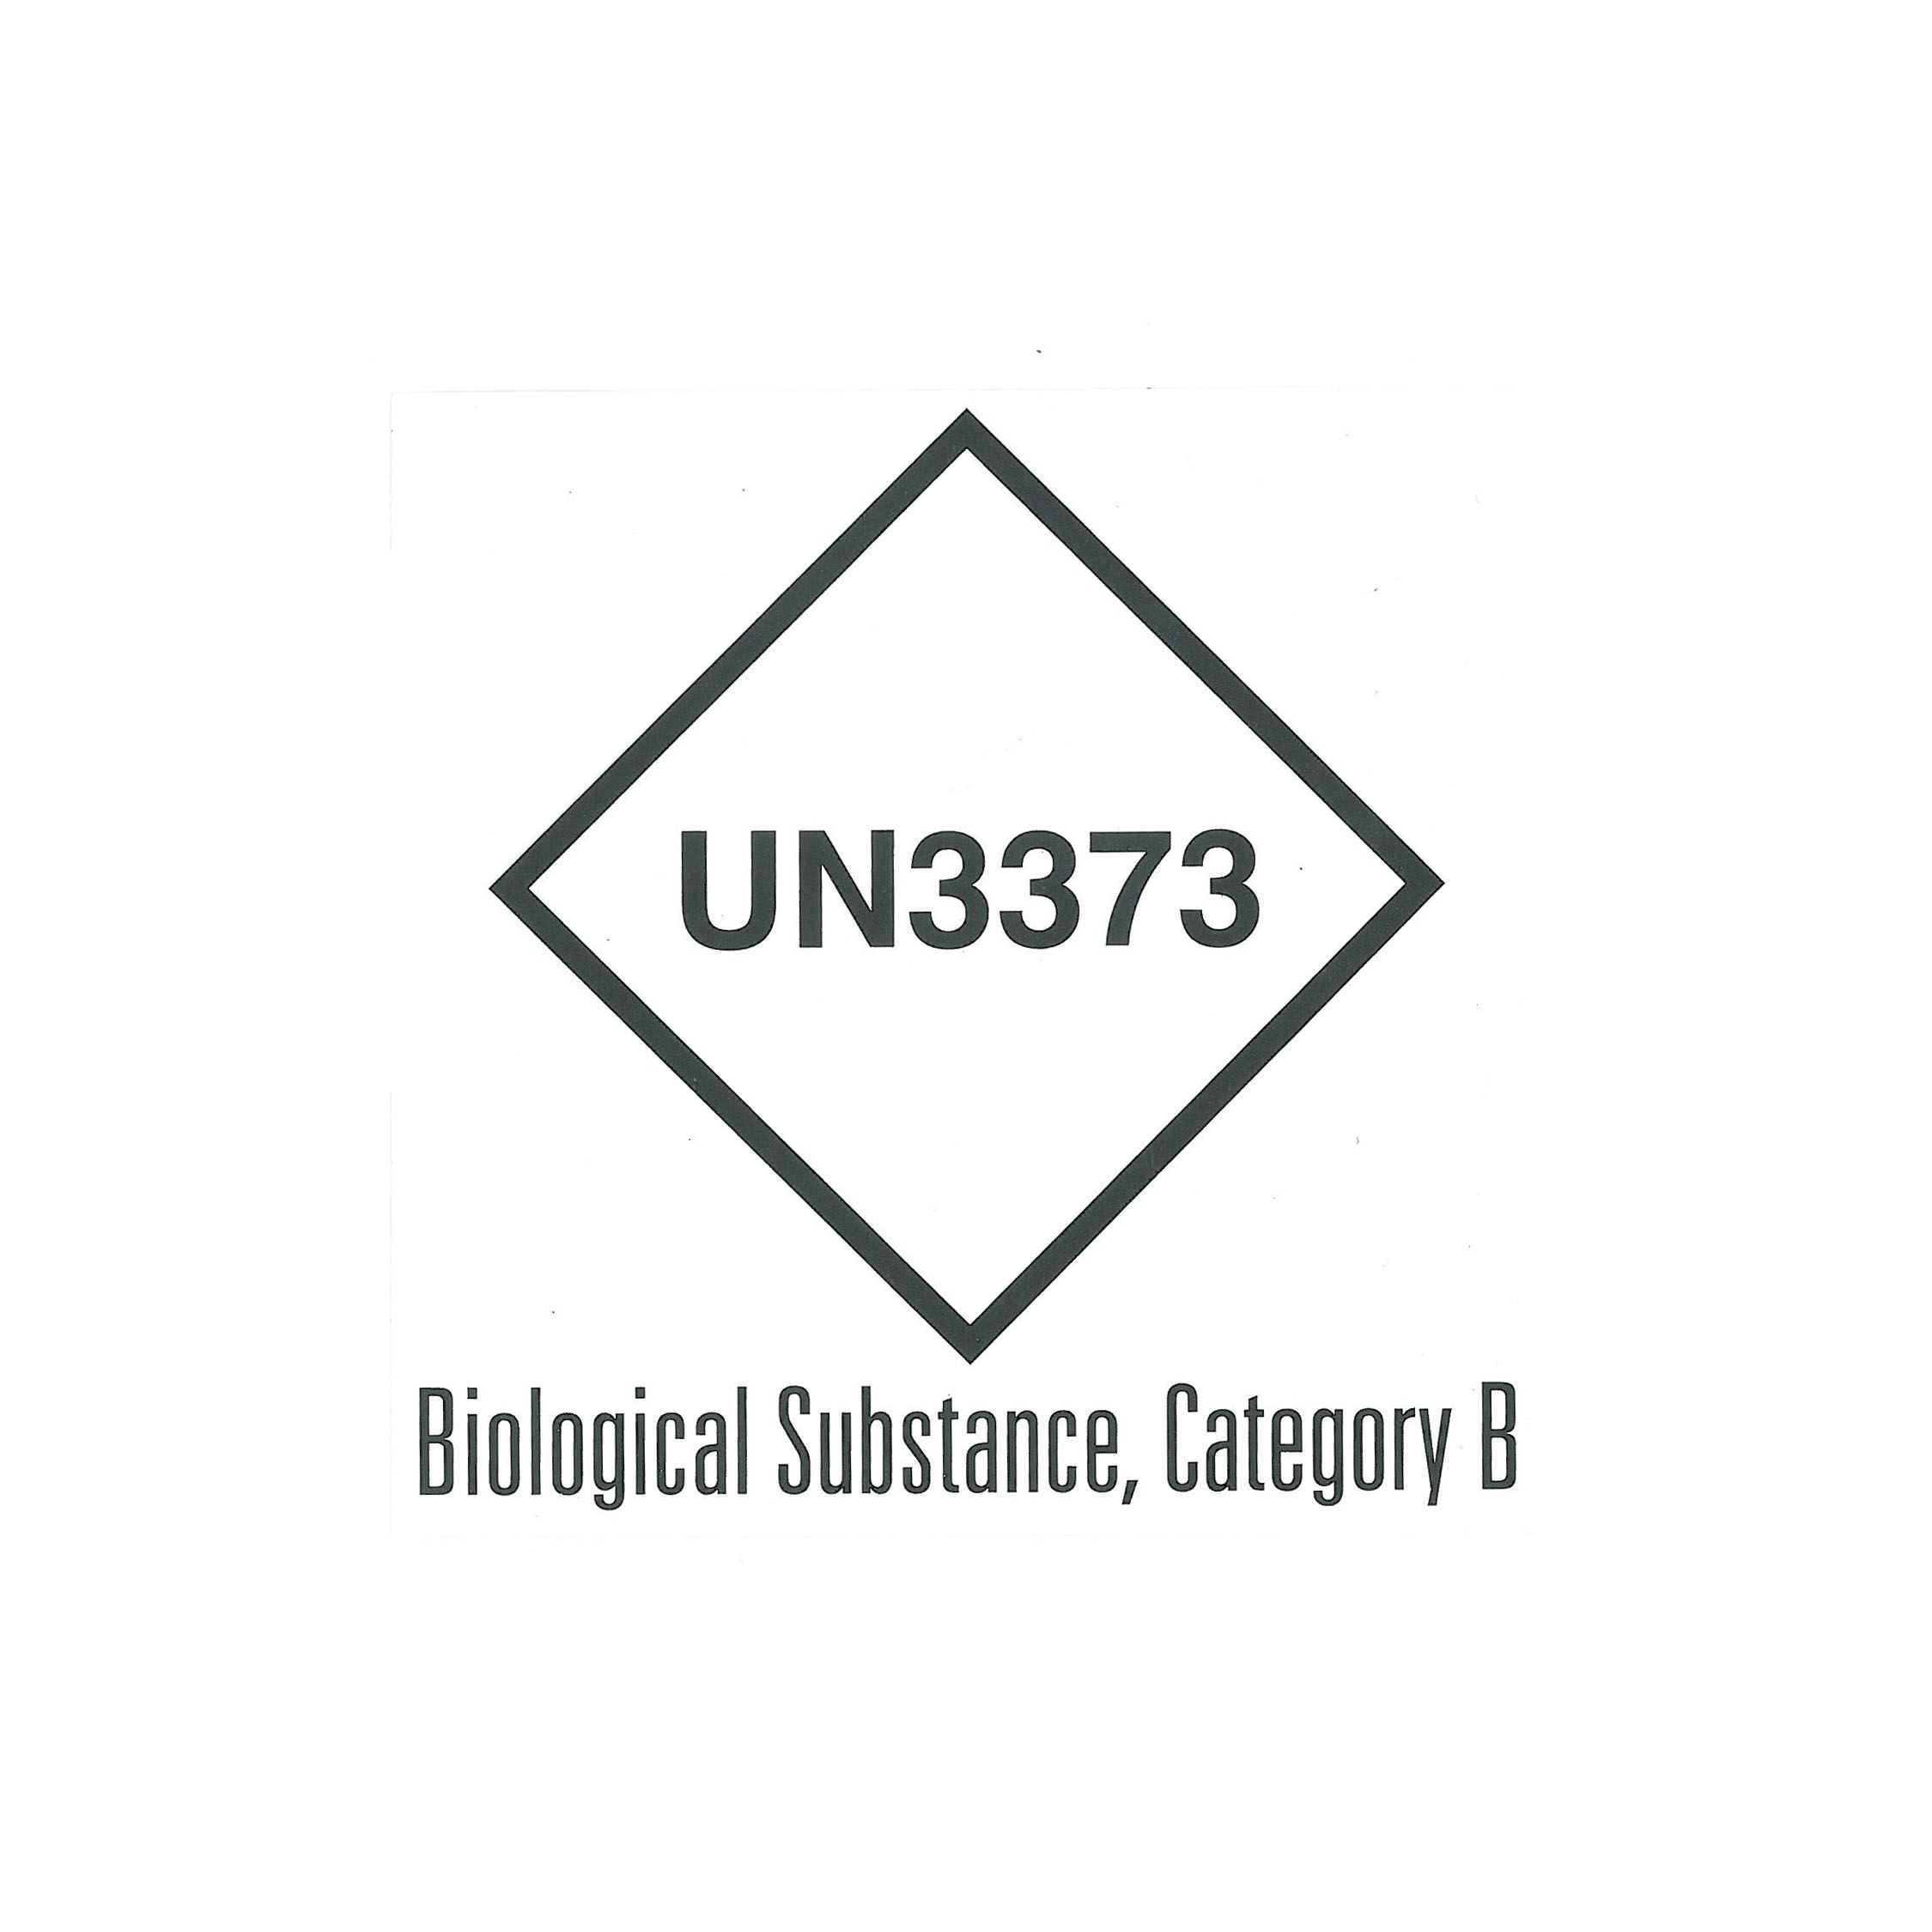 https://www.airseadg.com/en-us/wp-content/uploads/sites/2/un-3373-biological-substance-category-b-hazard-label.jpg